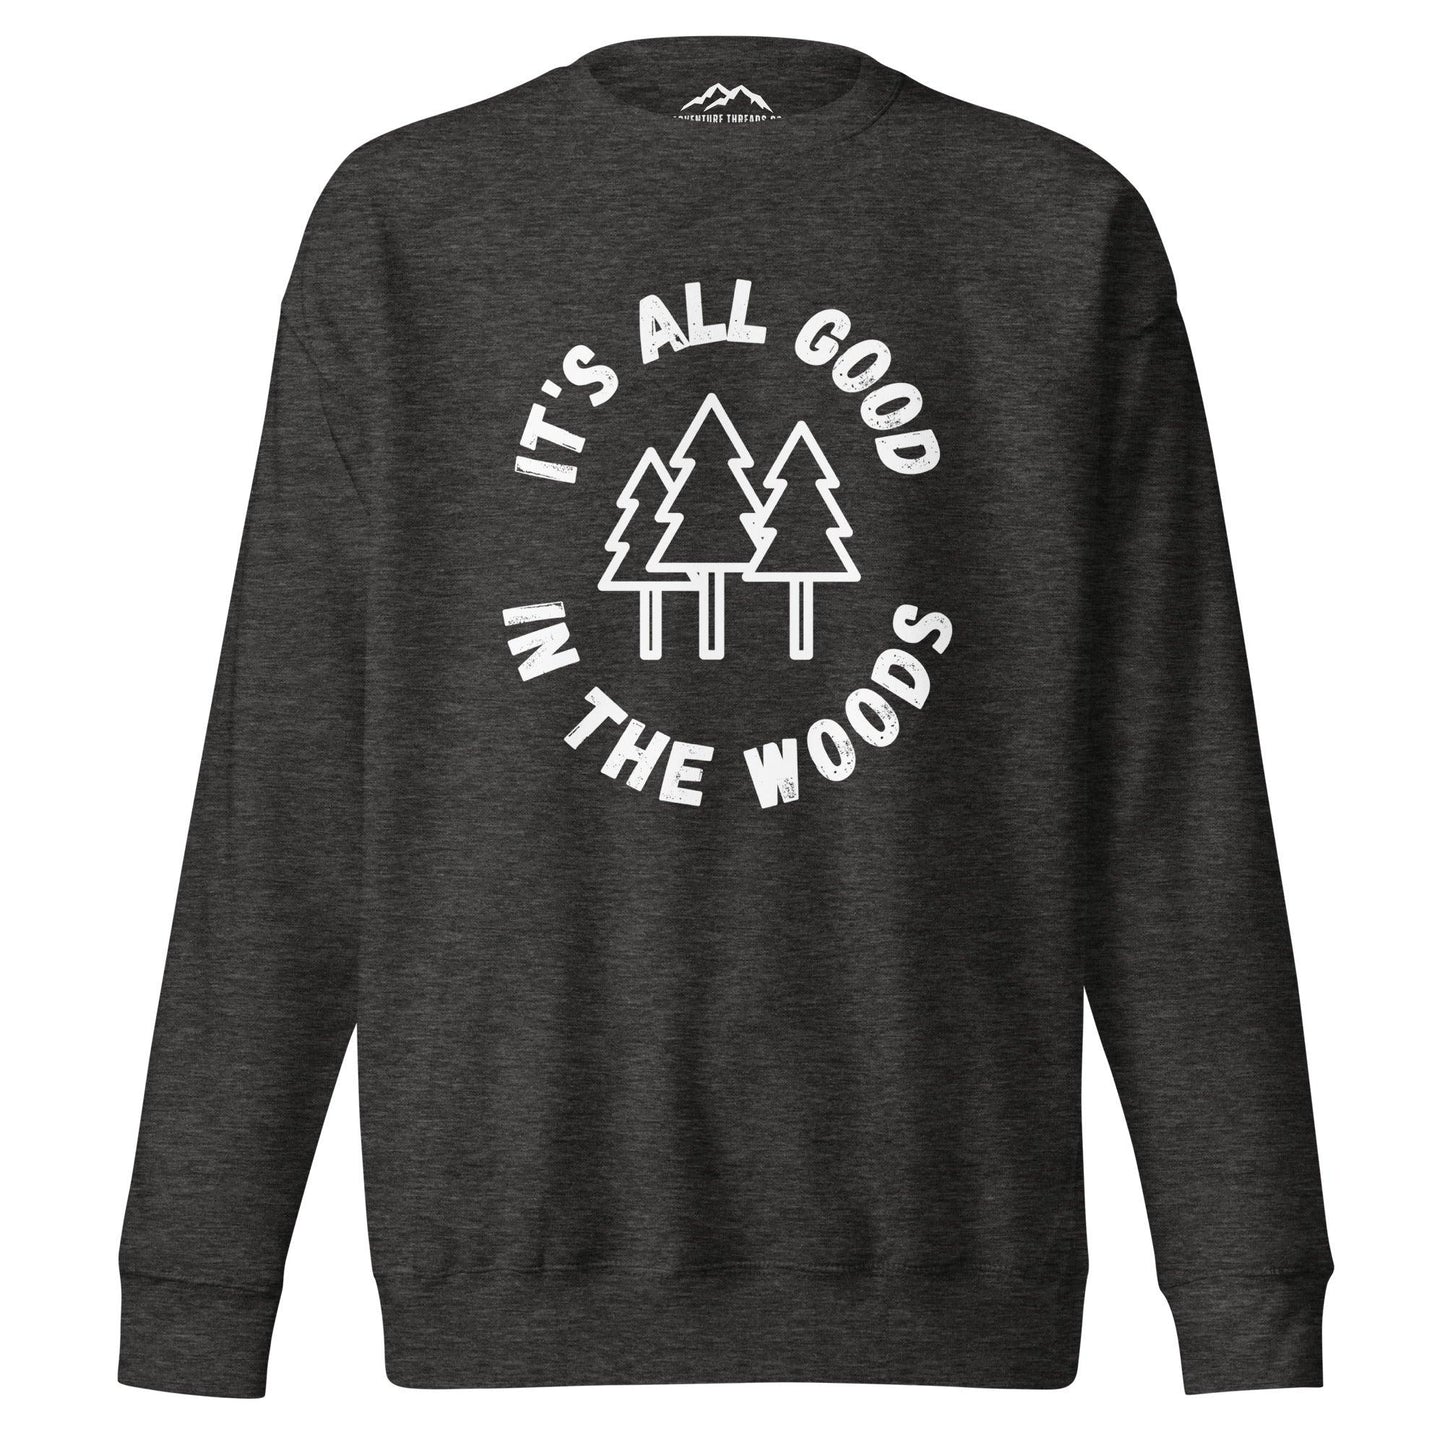 It's All Good in the Woods Premium Sweatshirt - Adventure Threads Company